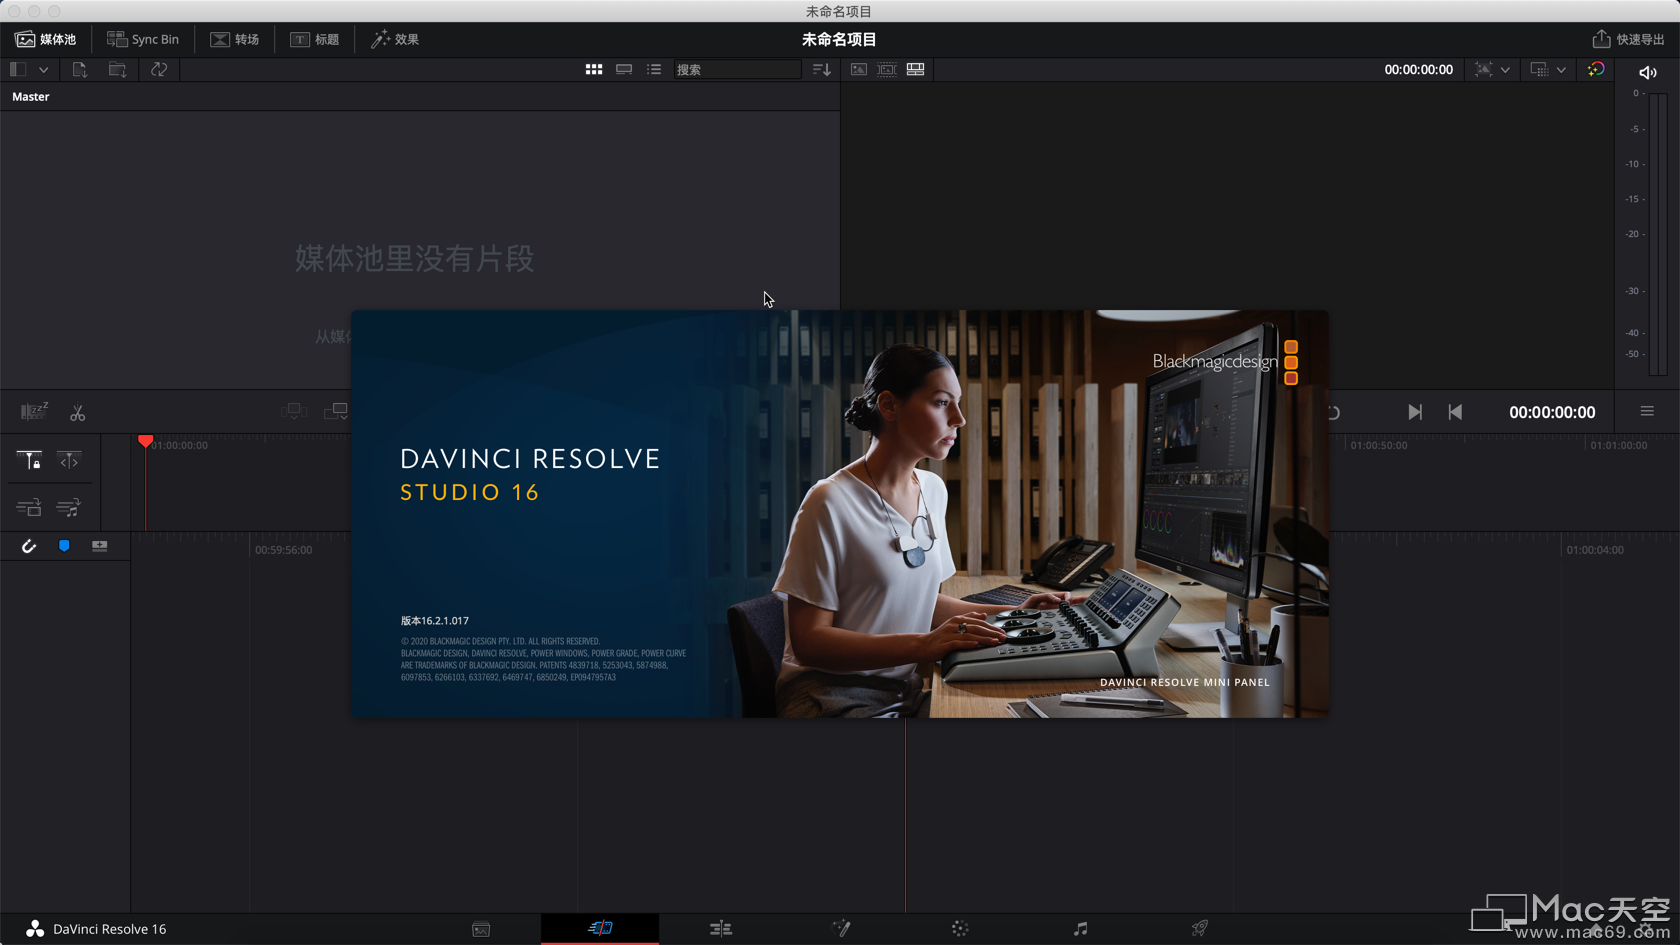 DaVinci Resolve Studio 16 for mac是一款什么工具